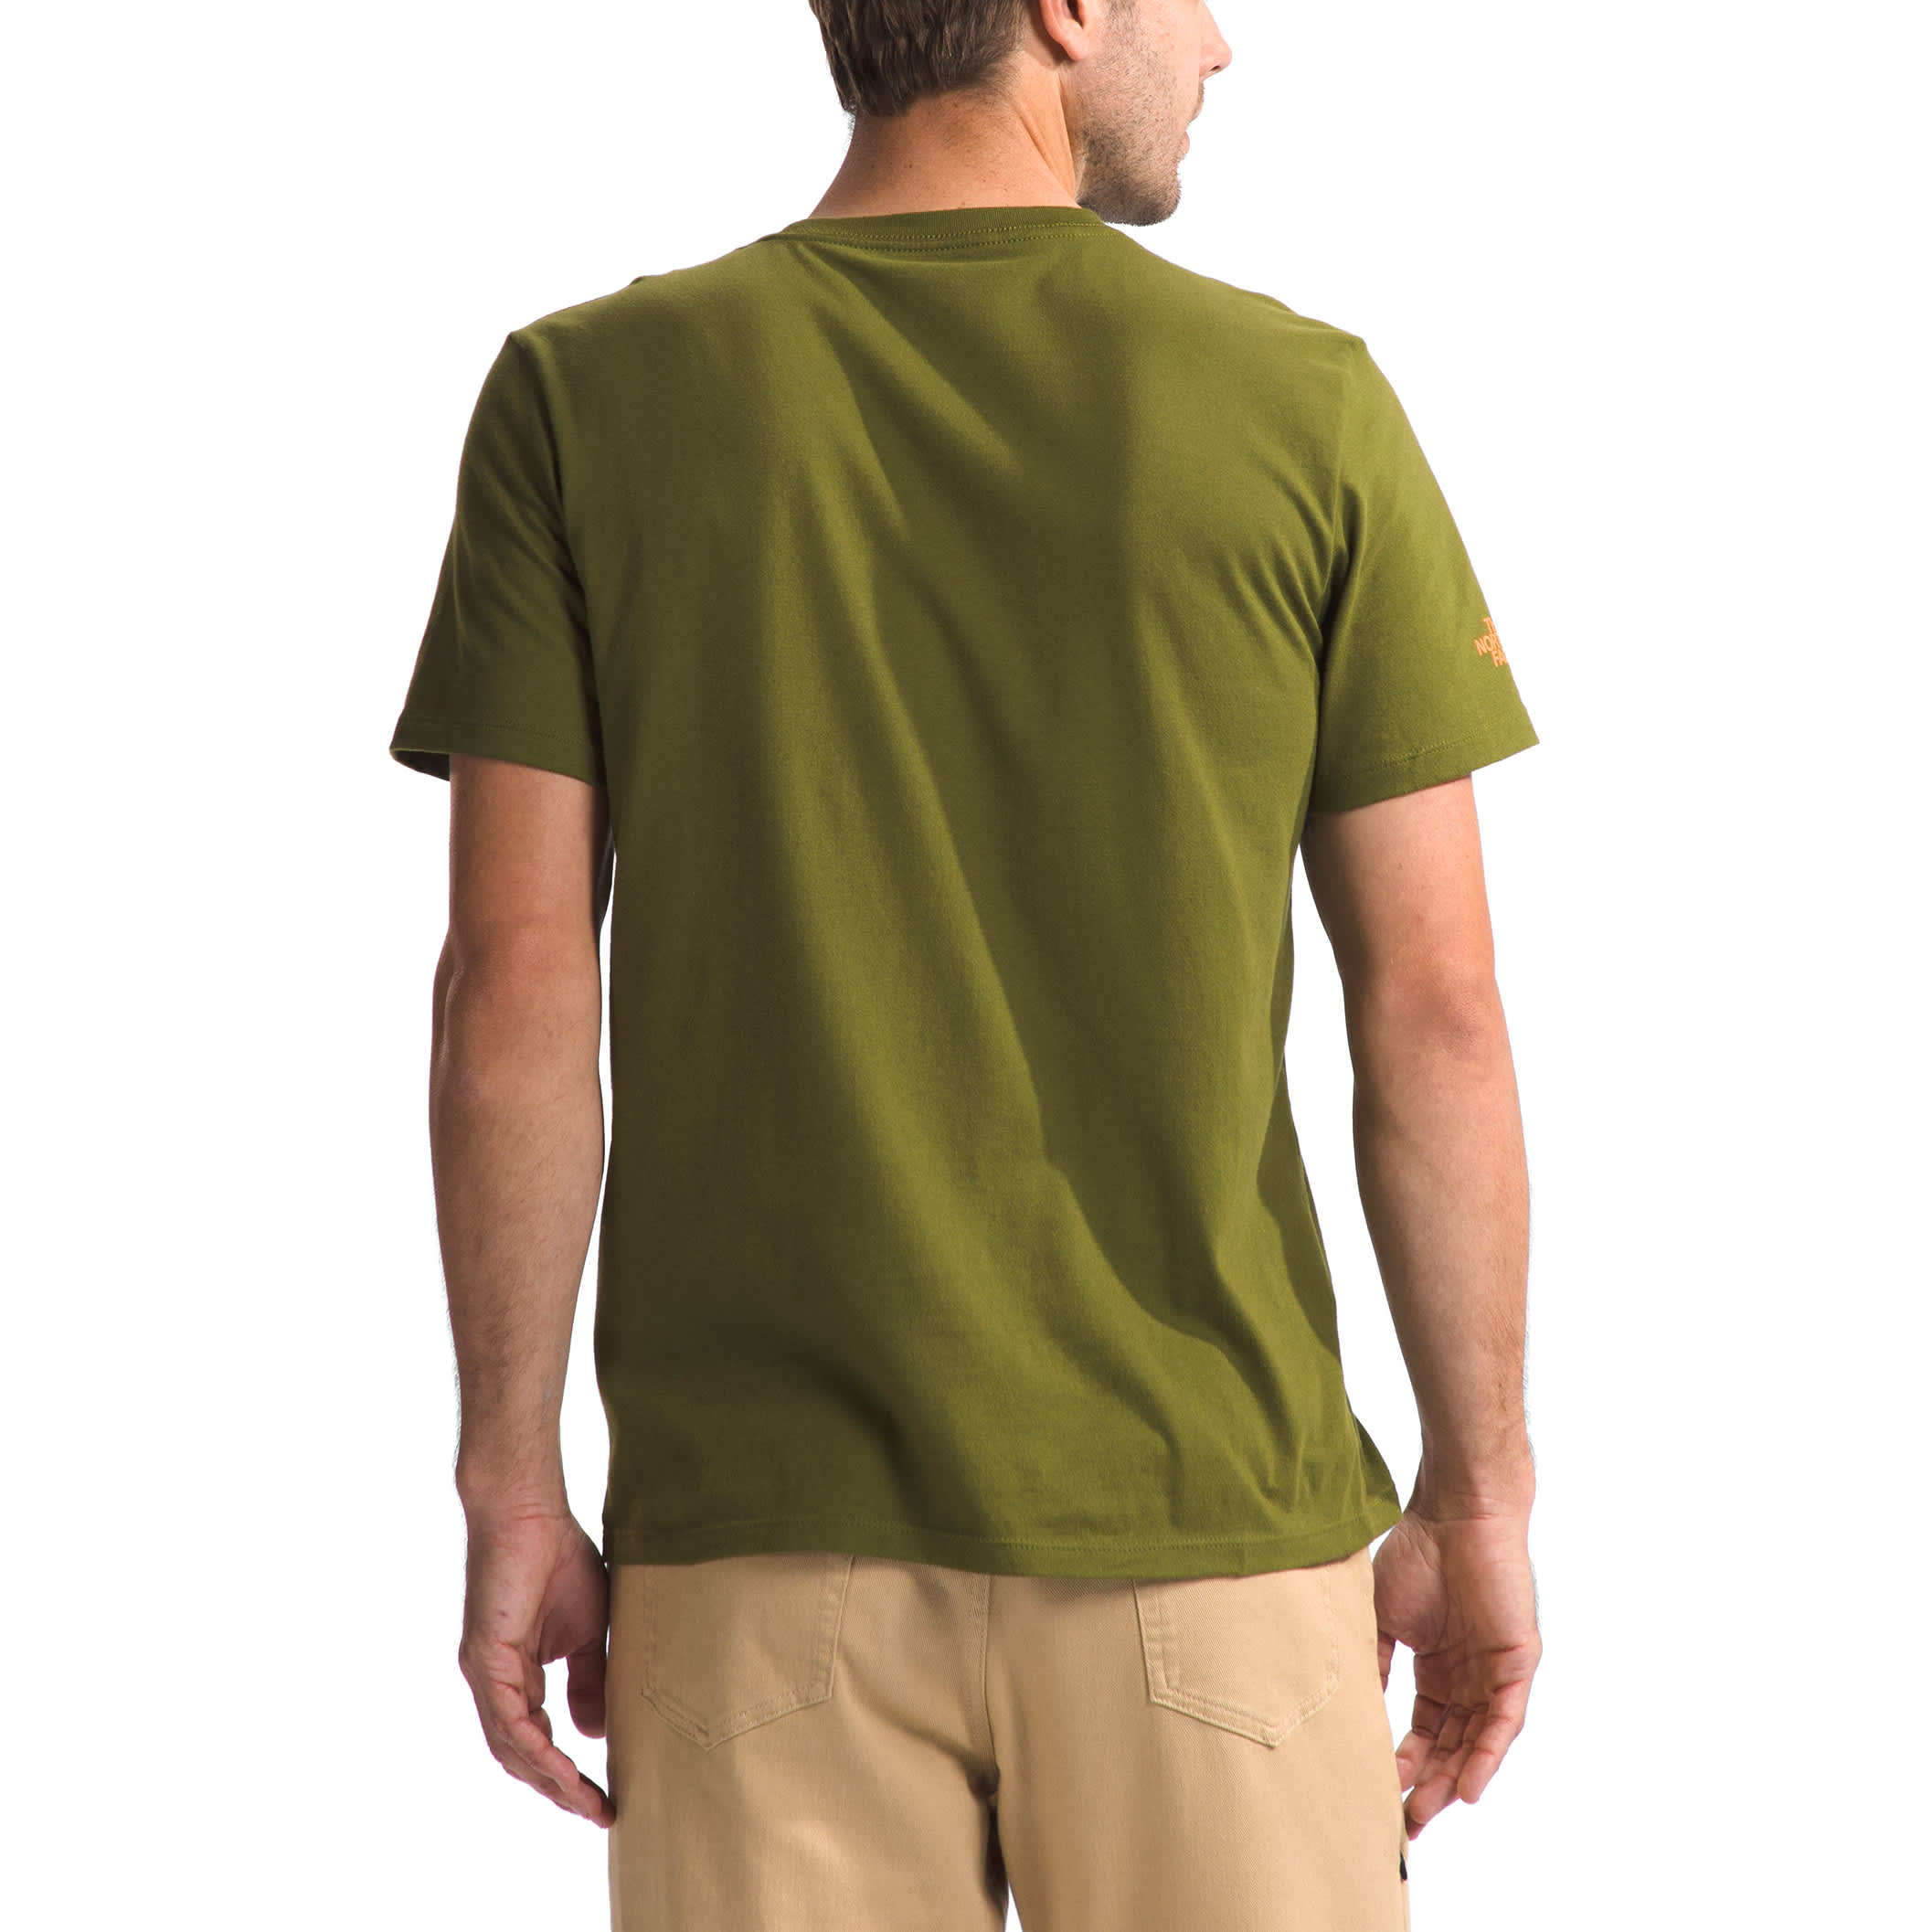 The North Face® Men’s Short-Sleeve Bears T-Shirt